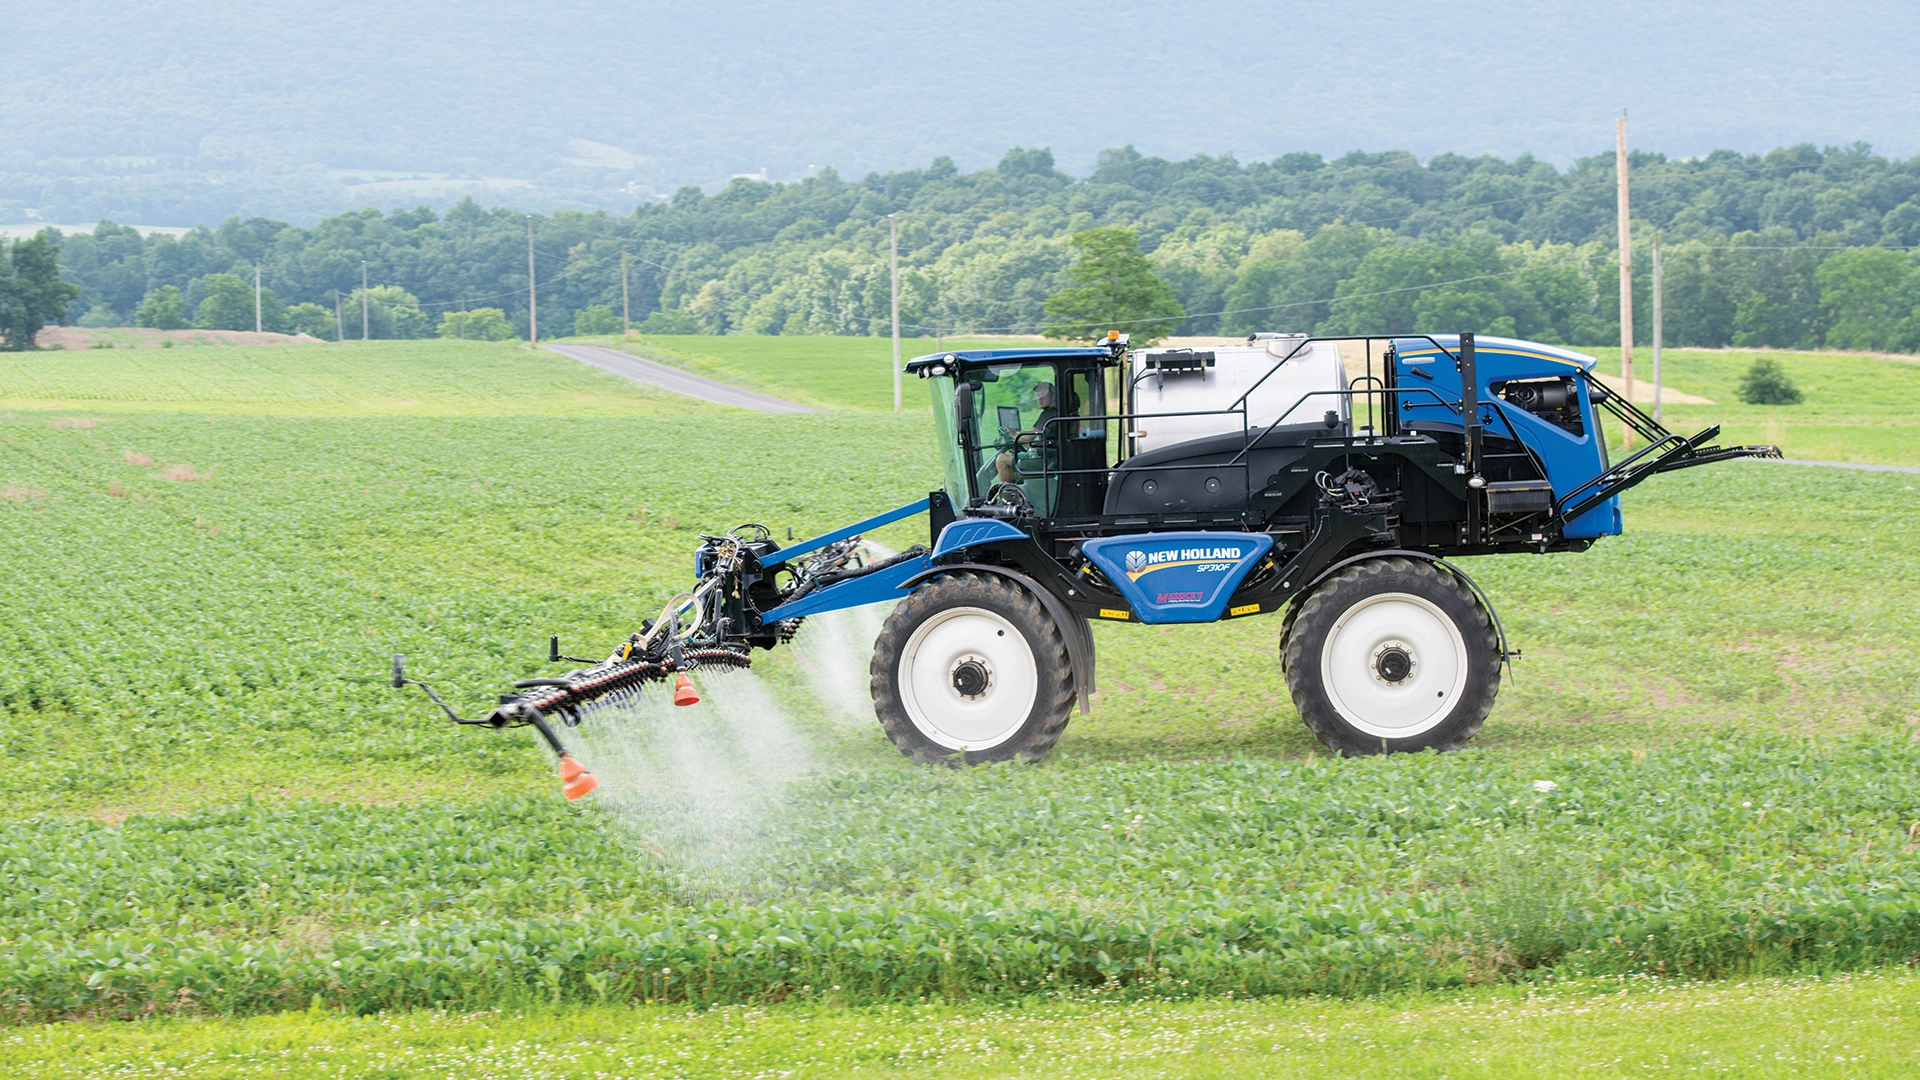 Farm Crop Sprayer - 3 Point Boom Sprayers for Tractors